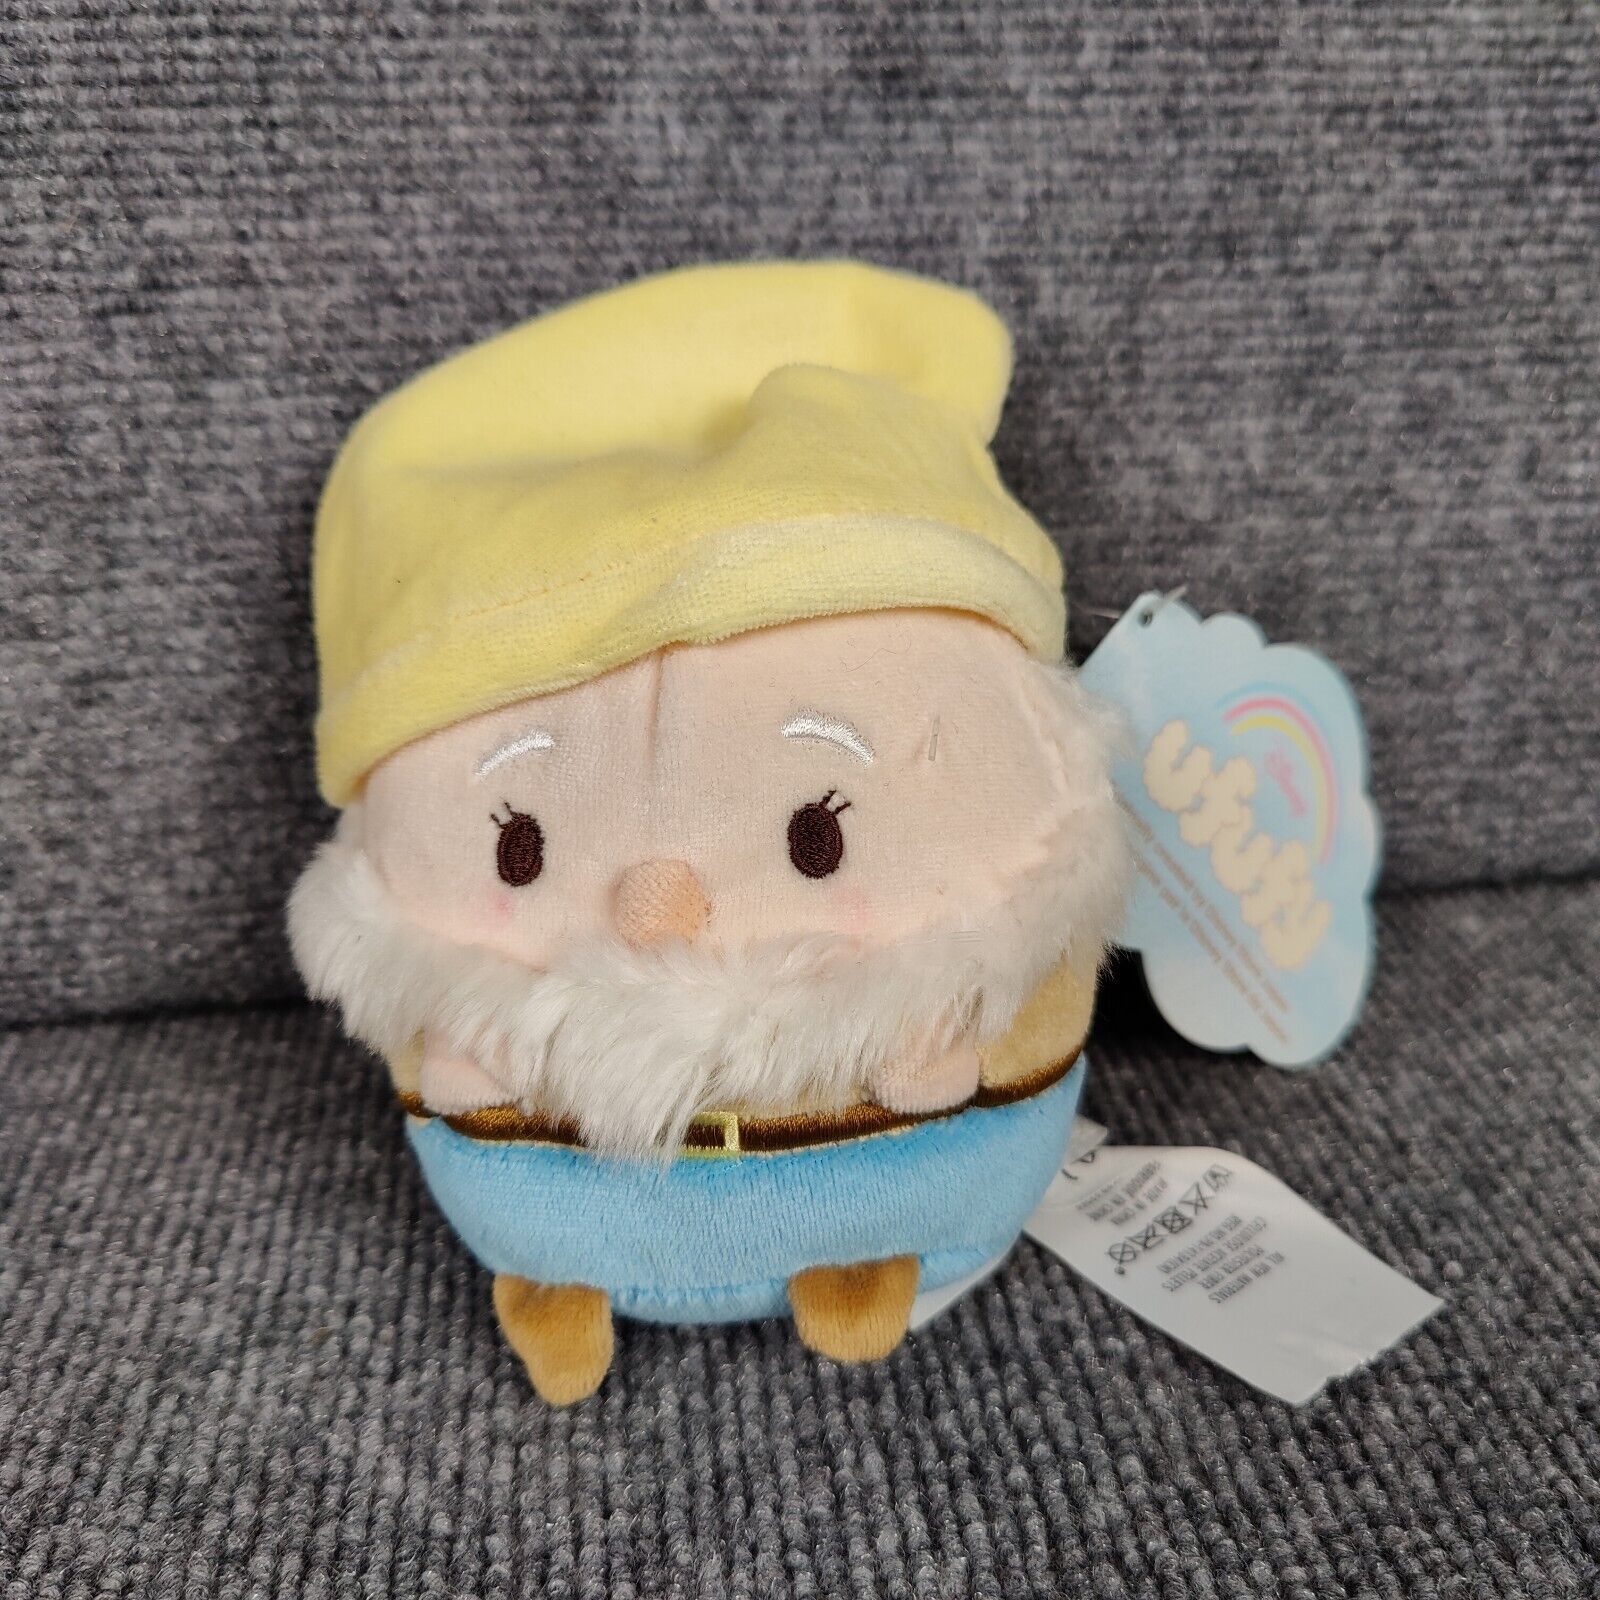 Snow White Happy Dwarf Plush Japan Ufufy Edition New With Tags 4.5” Disney Store